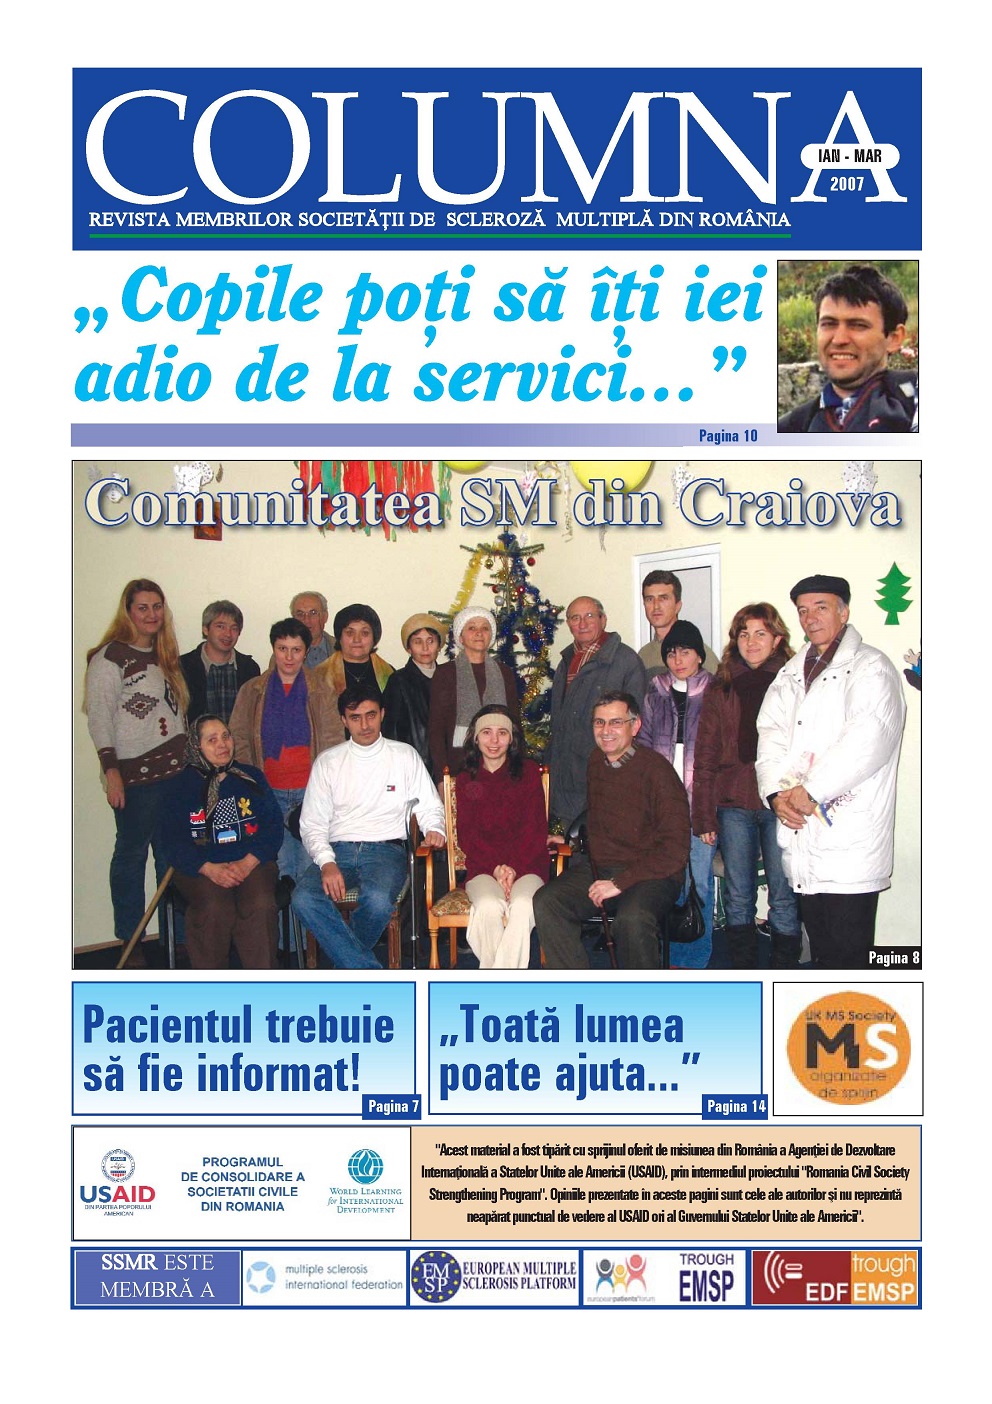 Revista Columna nr.1 2007